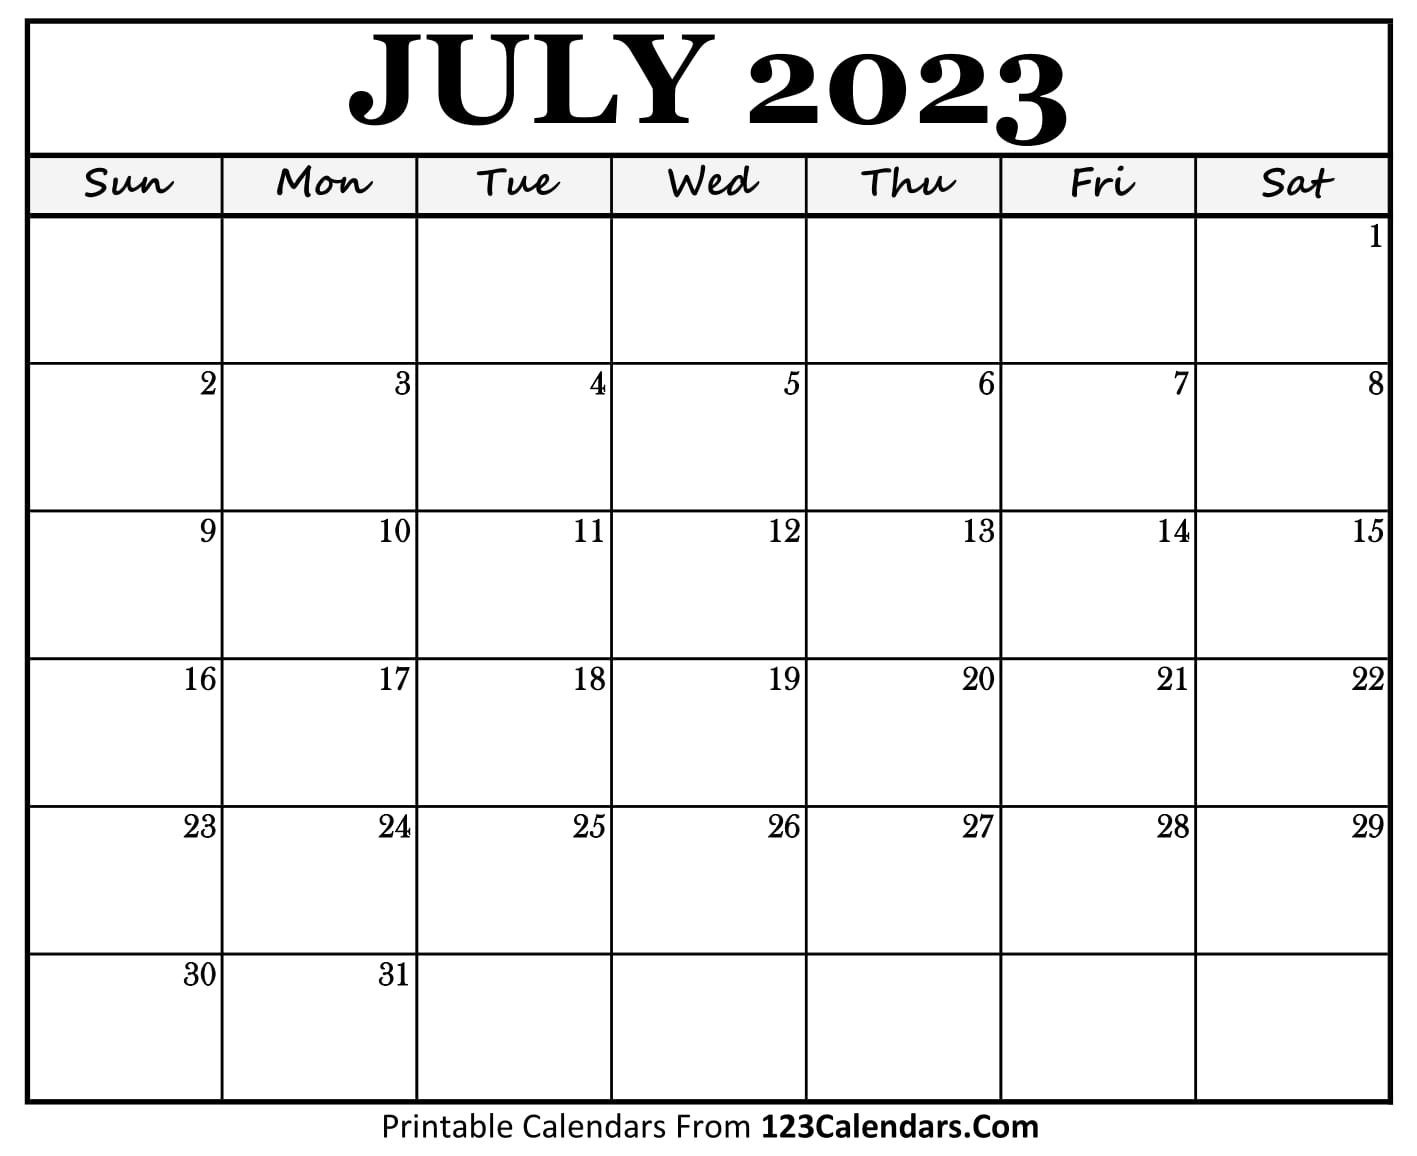 Printable July 2023 Calendar Templates